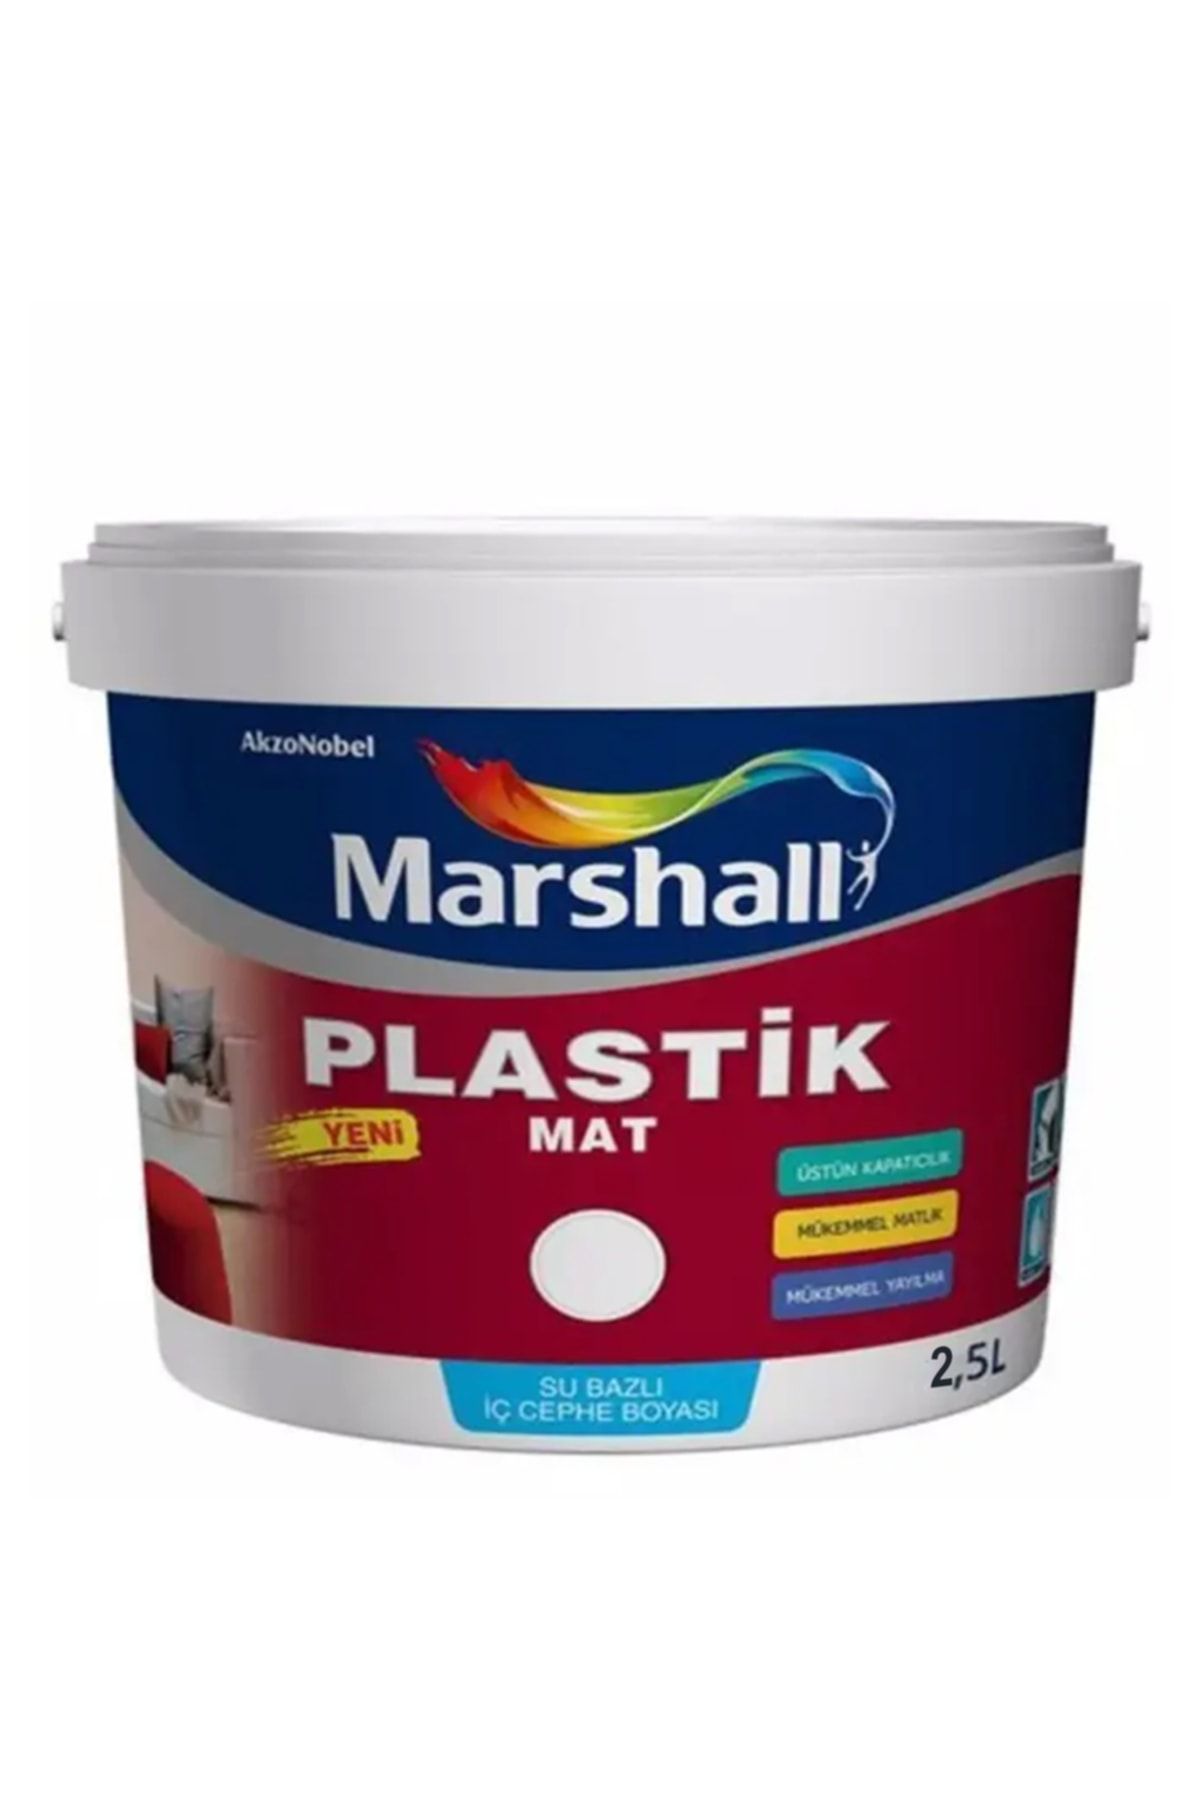 Marshall Plastik Mat Silinebilir Iç Cephe Boyası Papaya 2,5 Lt (3,5 Kg)